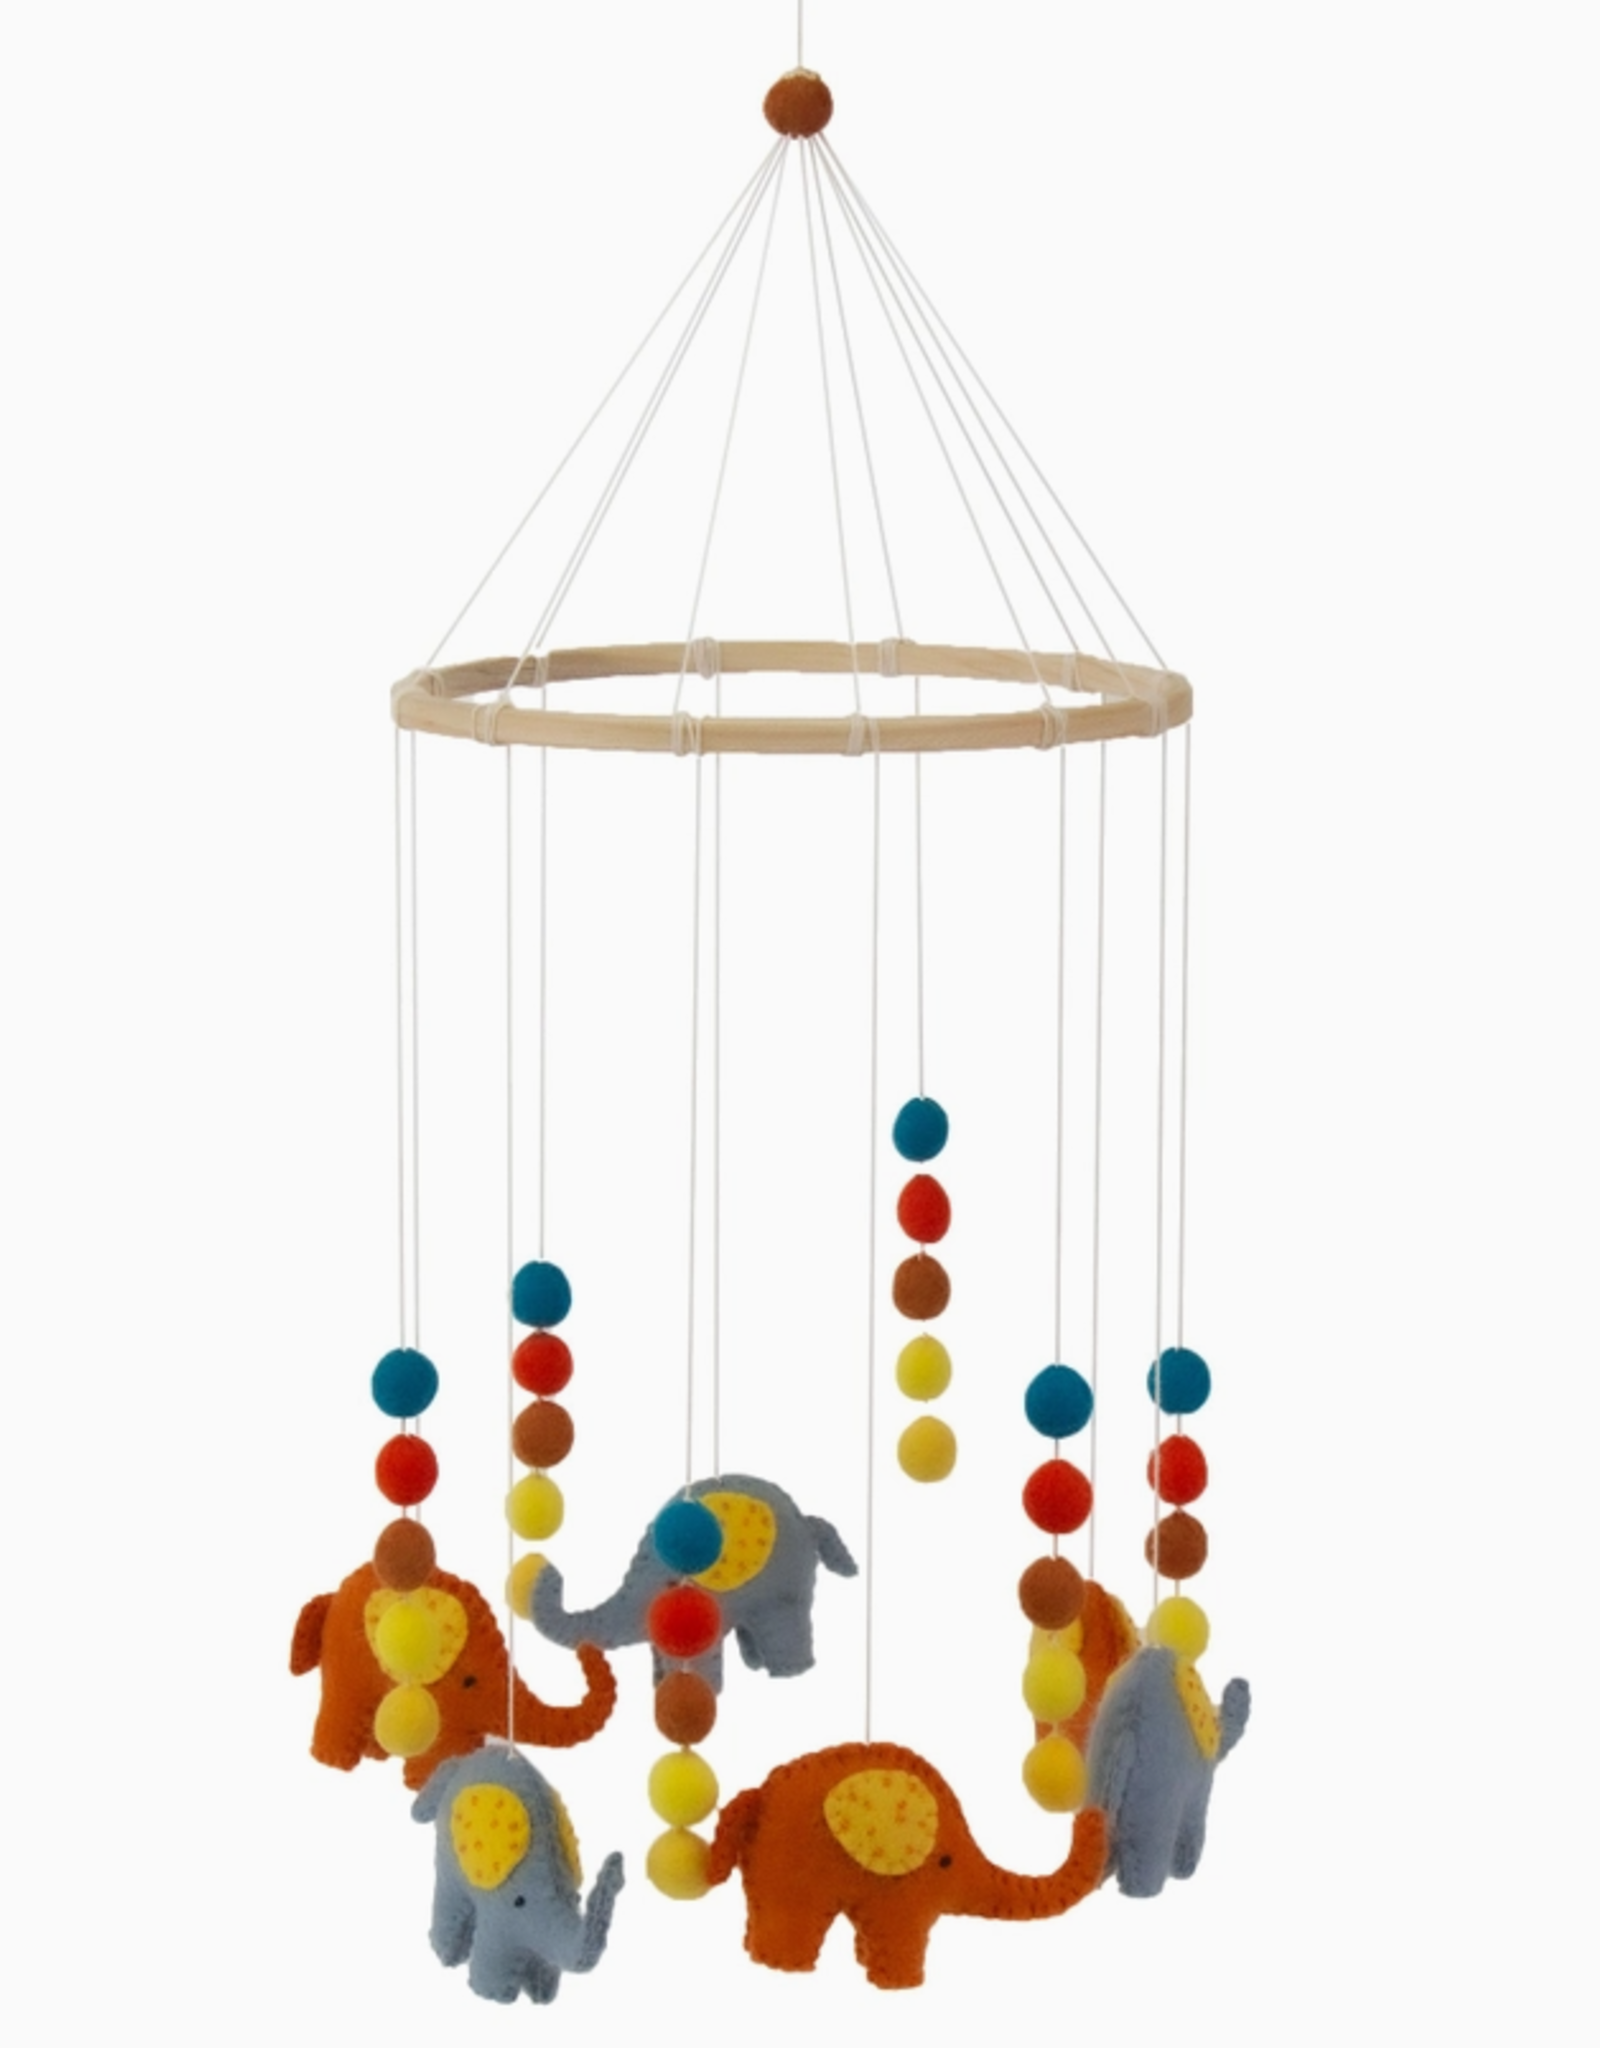 Global Crafts Blue and Orange Elephant Felt Nursery Mobile